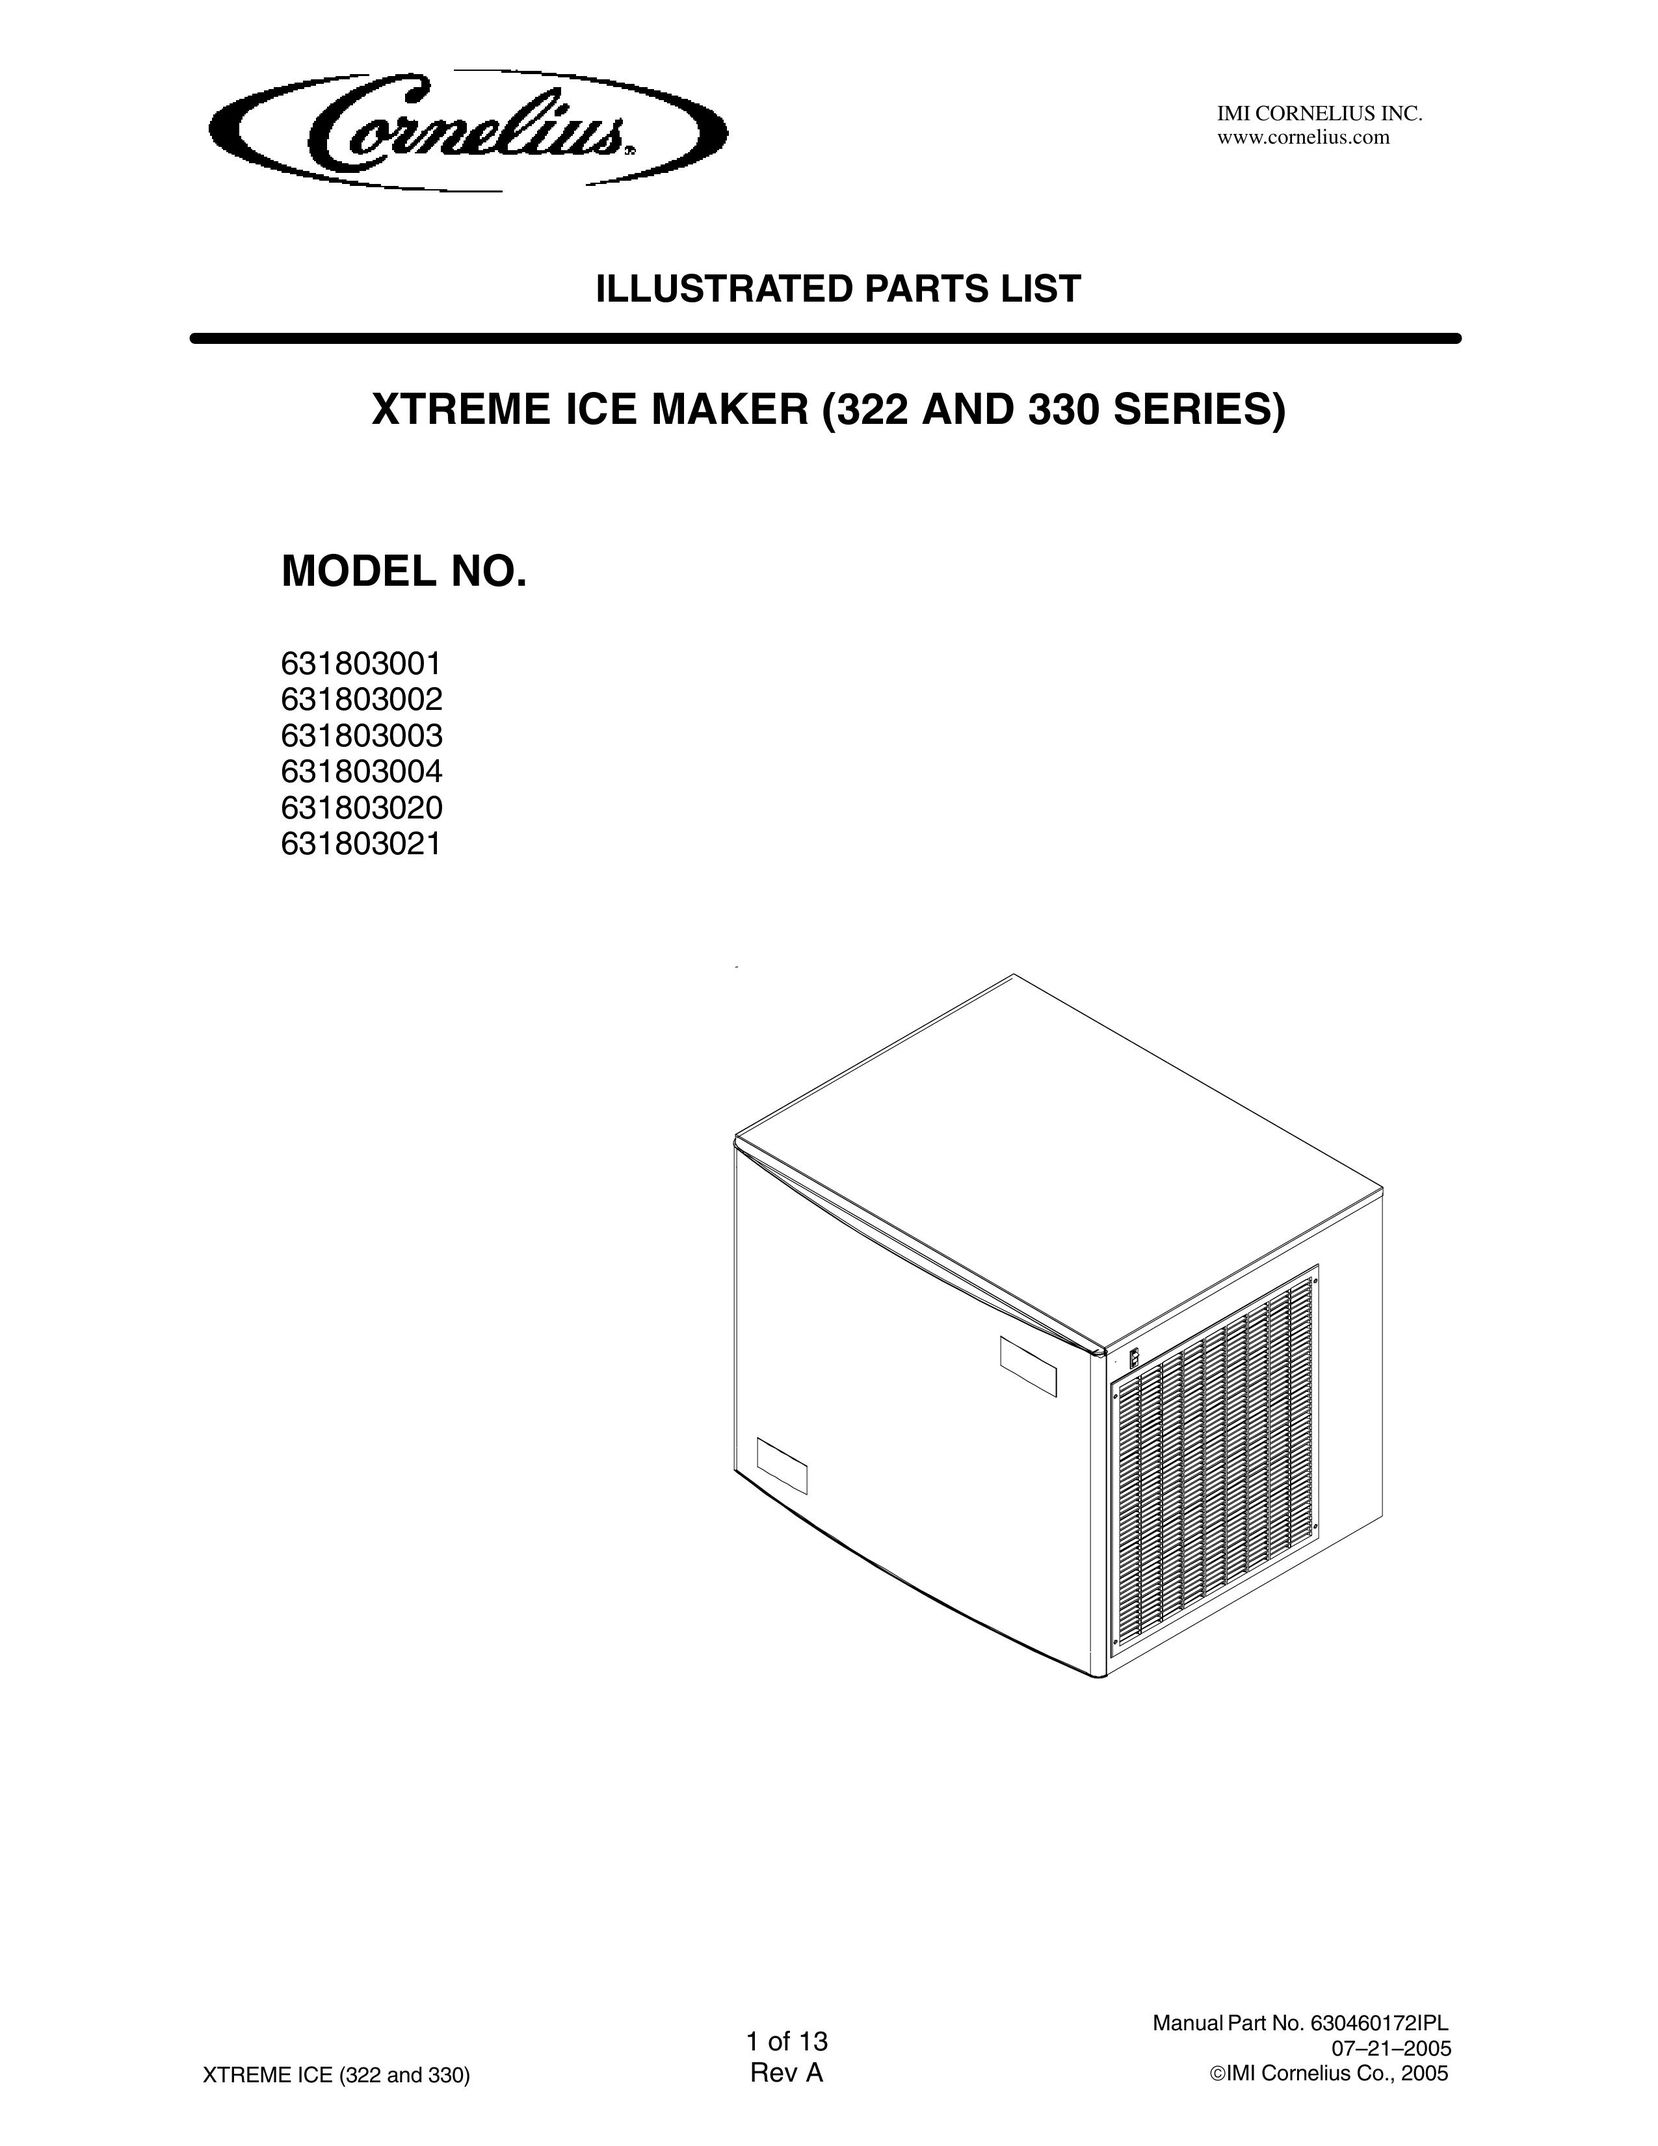 Cornelius 330 Series Ice Maker User Manual